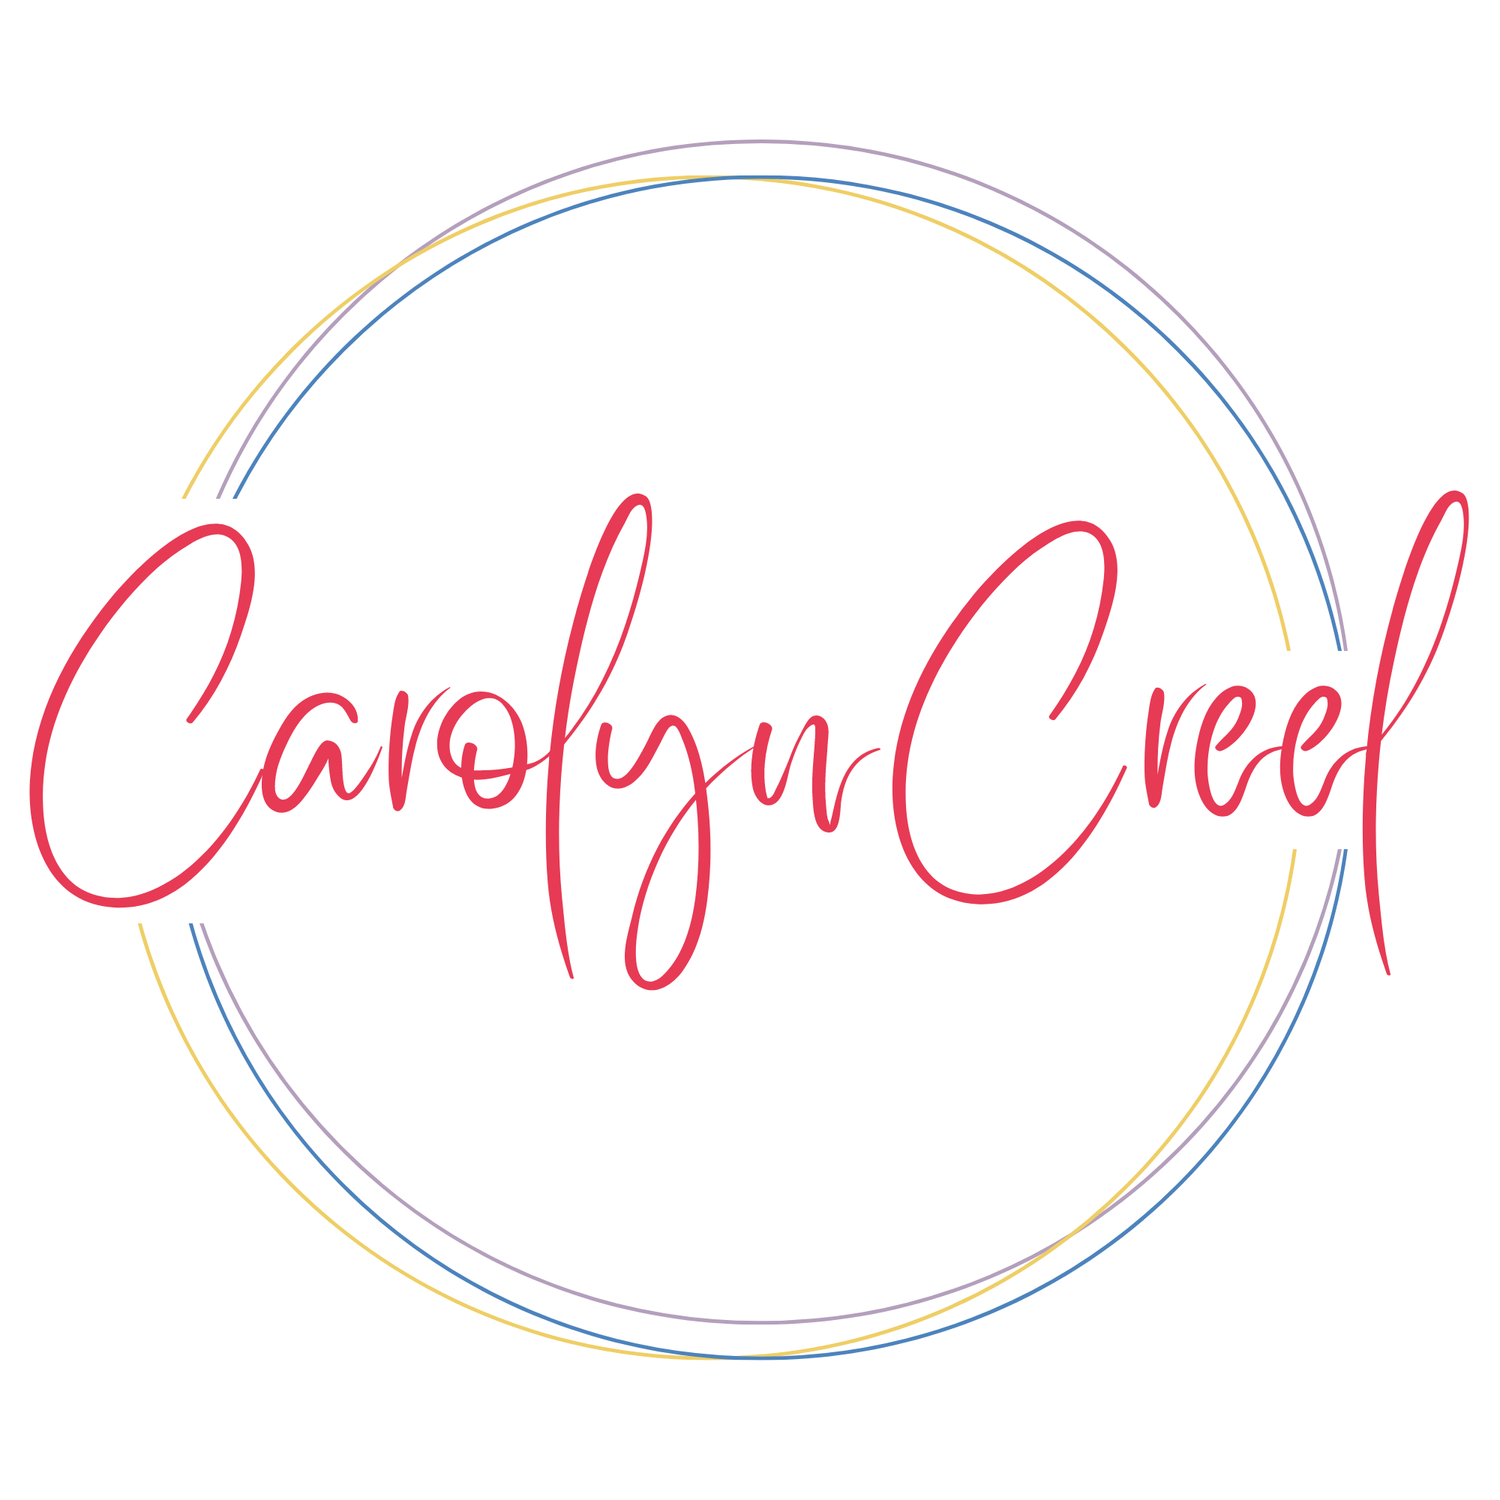 Carolyn Creel